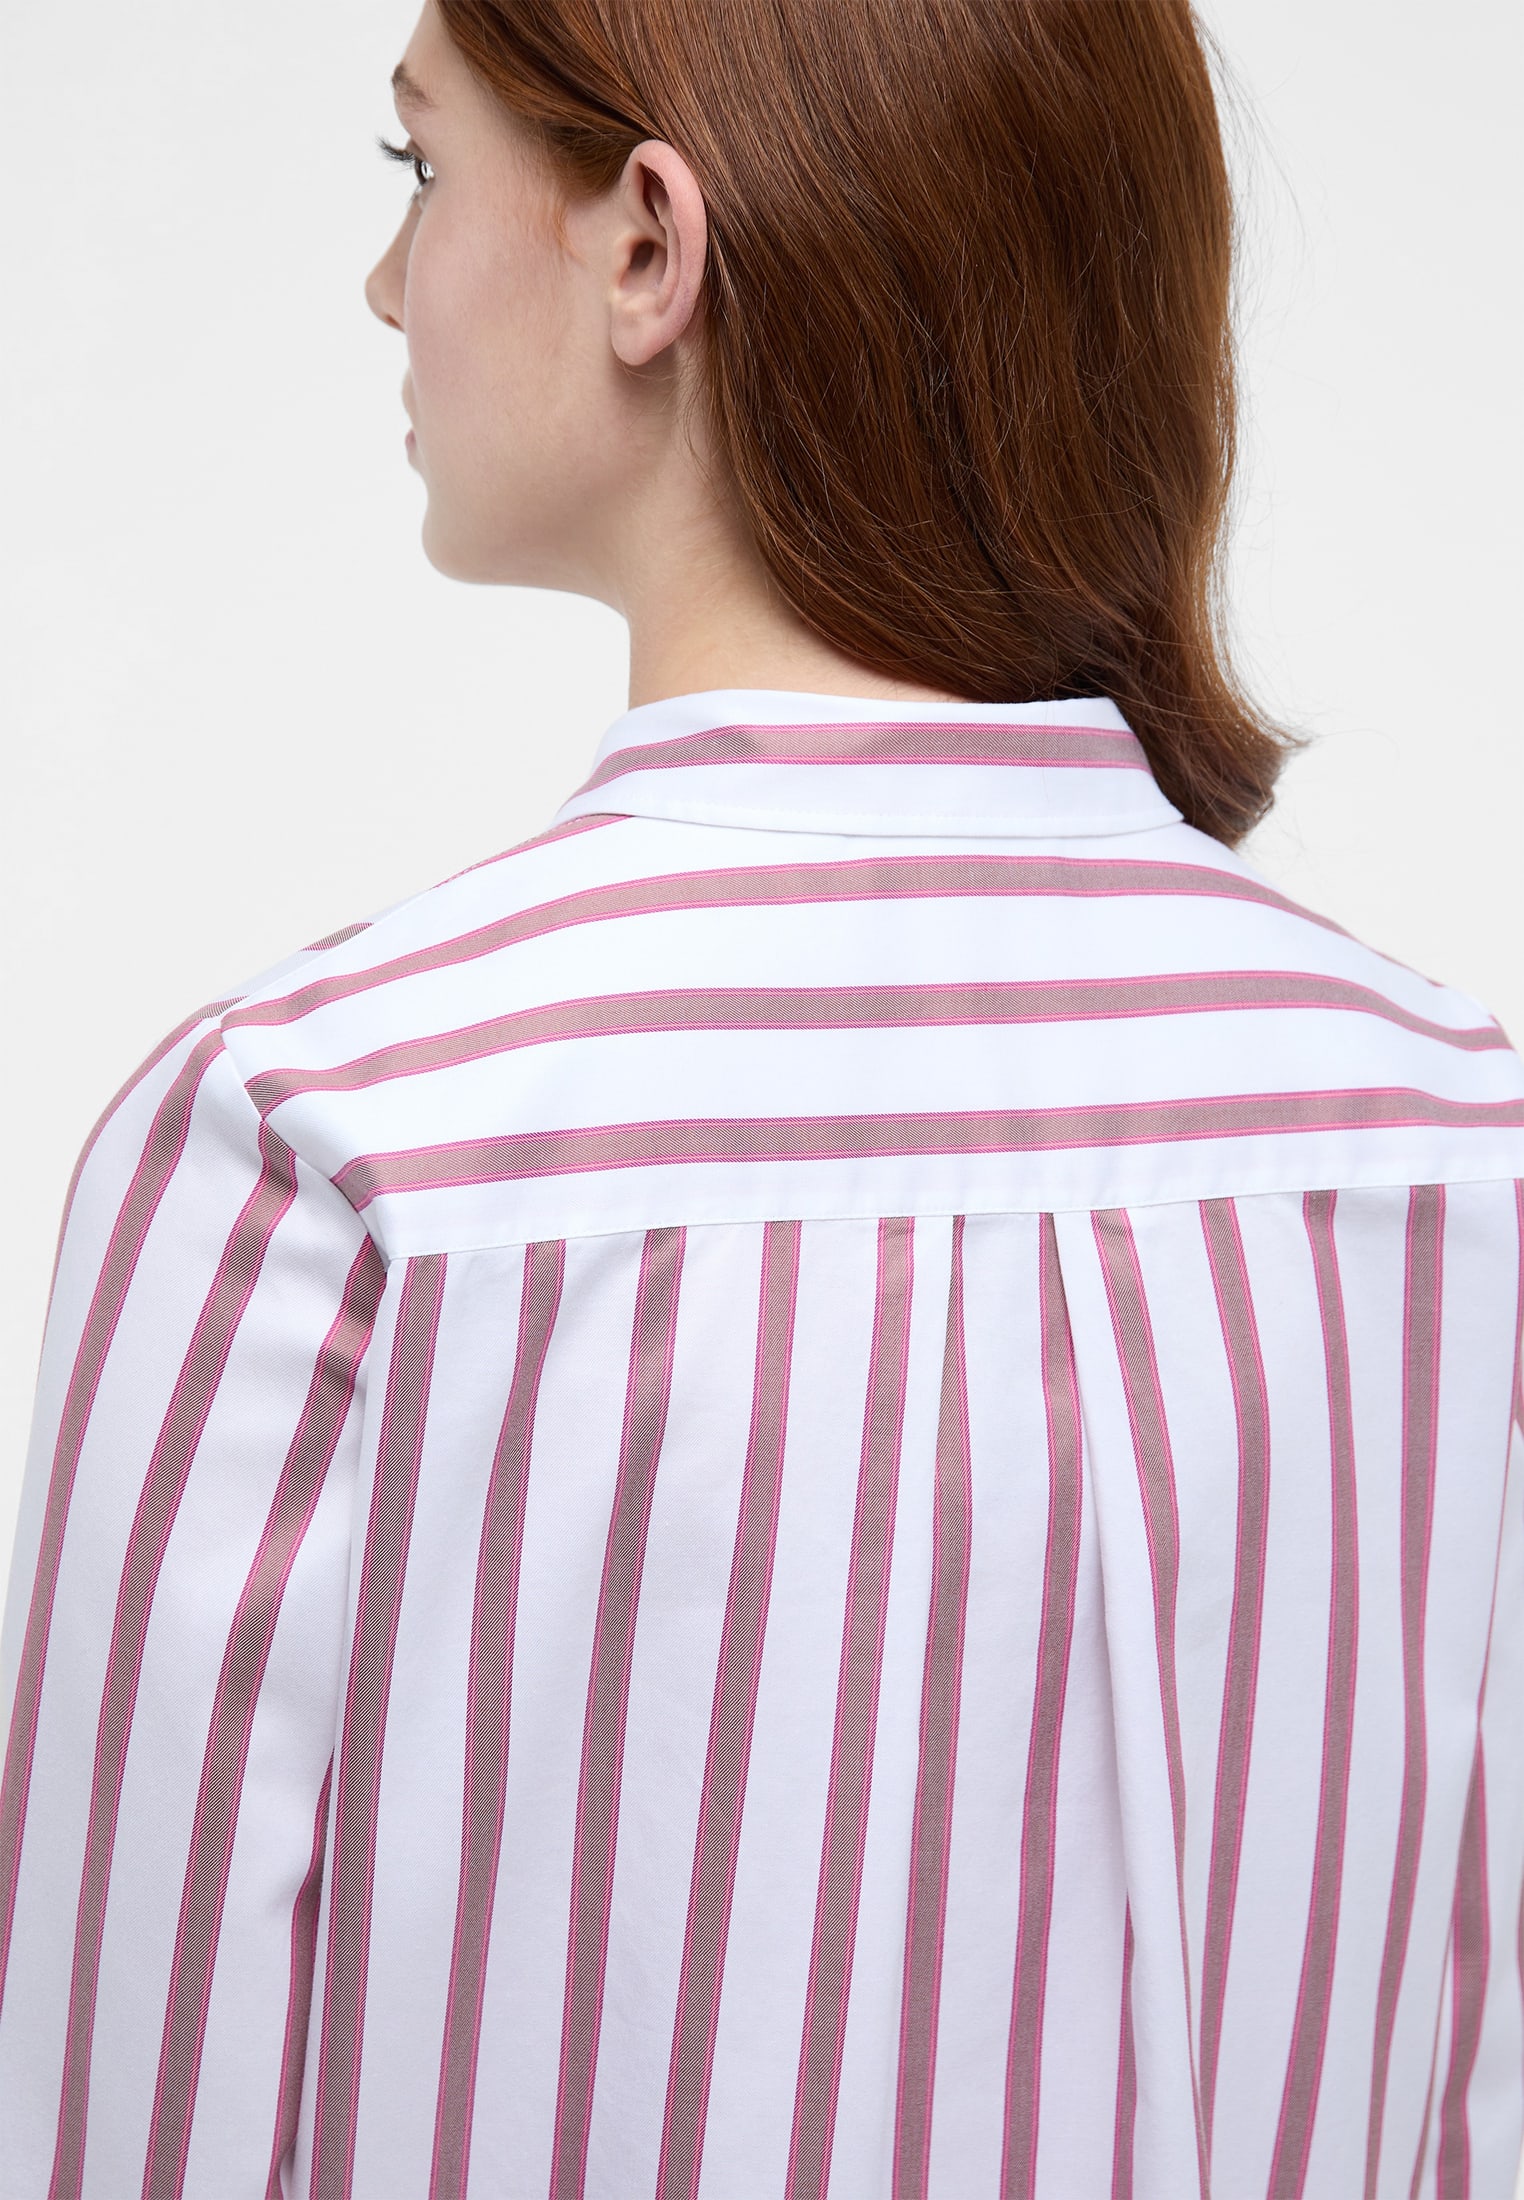 Luxury 46 Soft in gestreift pink Bluse Langarm pink Shirt | 2BL04213-15-21-46-1/1 | | |